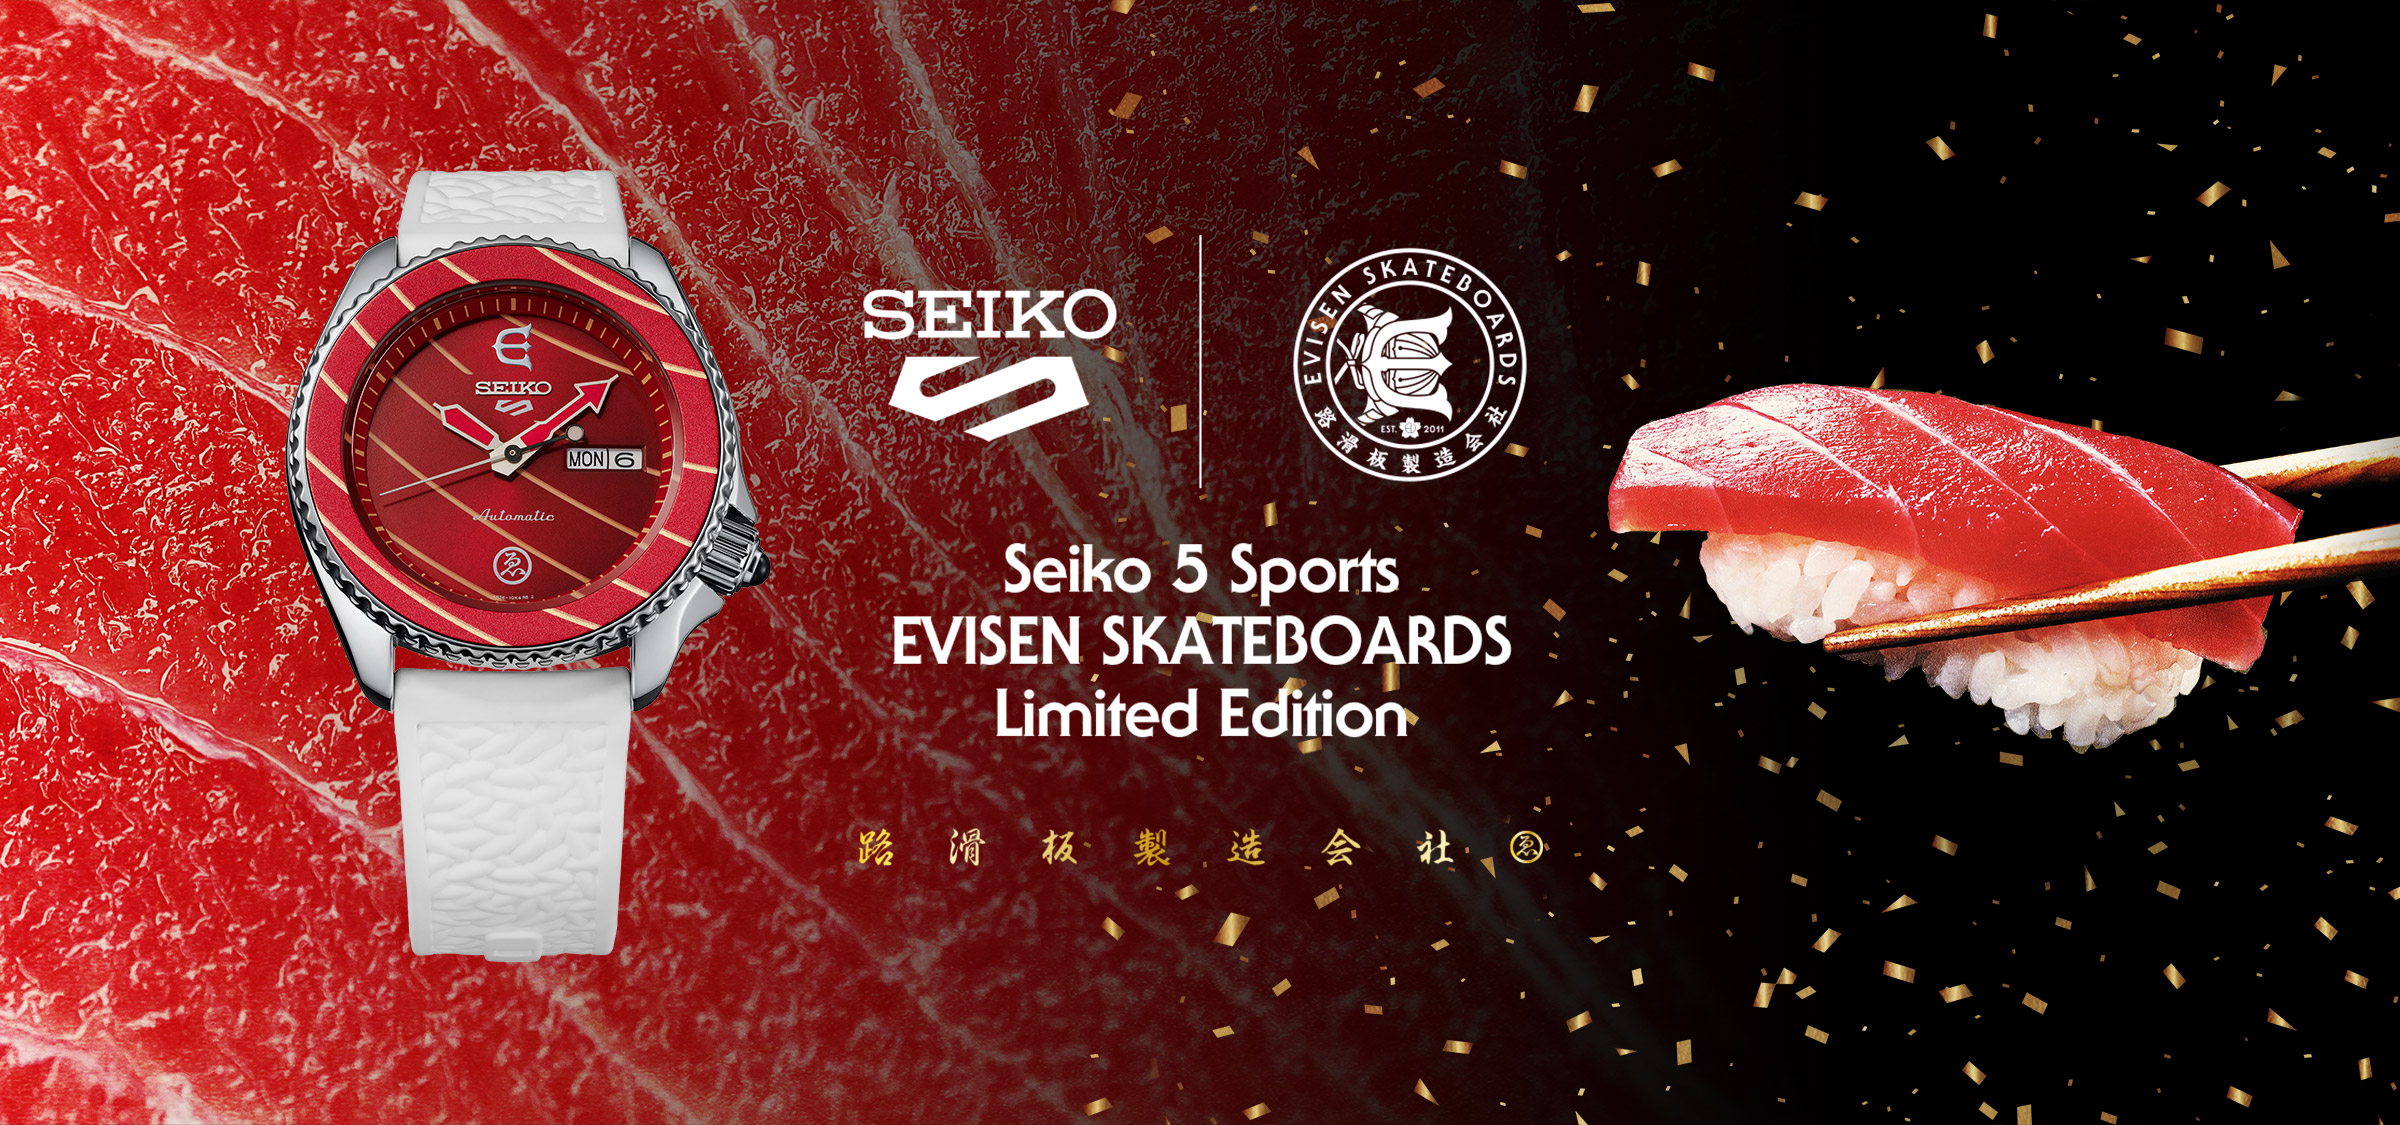 Seiko 5 Sports EVISEN SKATEBOARDS Limited Edition | Seiko Watch Corporation